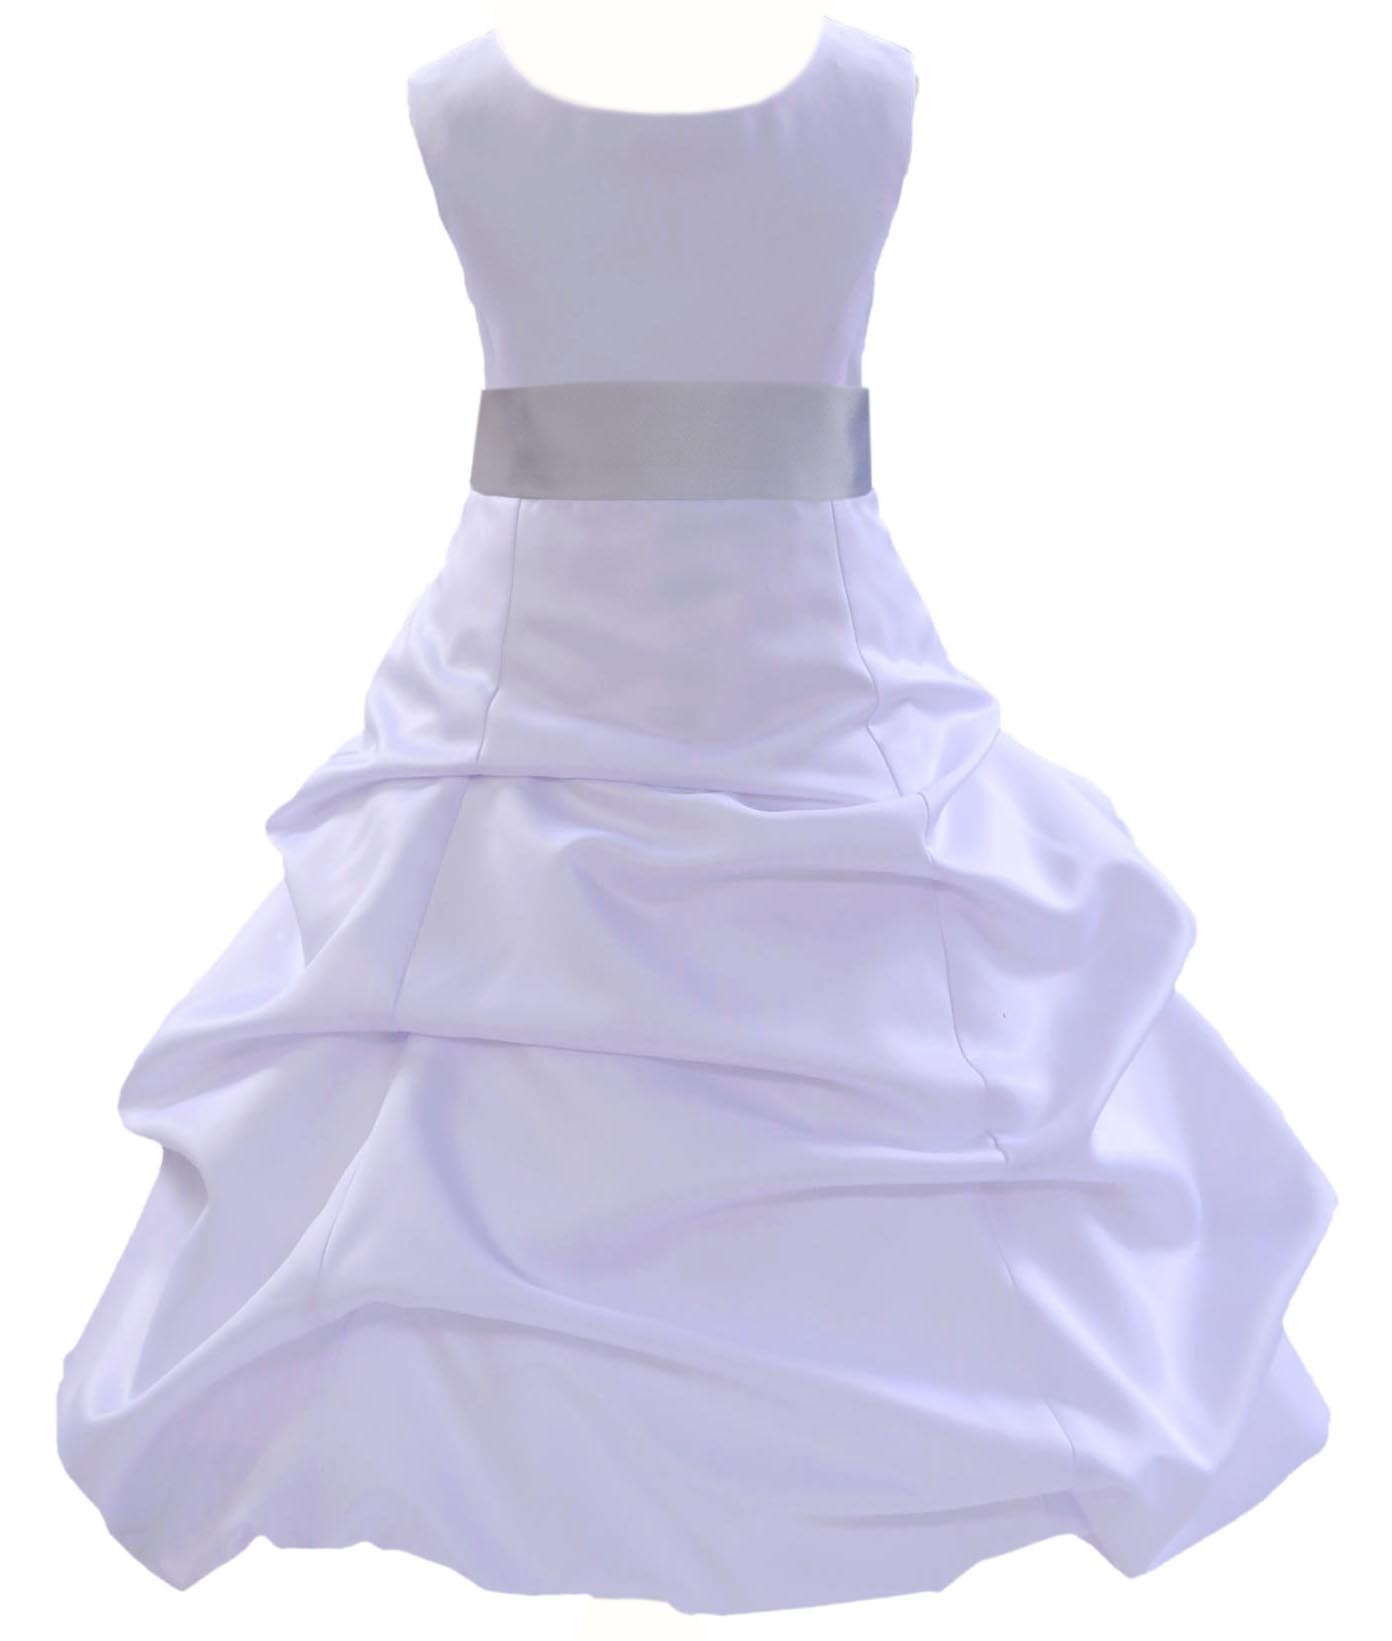 Matching White Satin Pick-Up Bubble Flower Girl Dress 806S